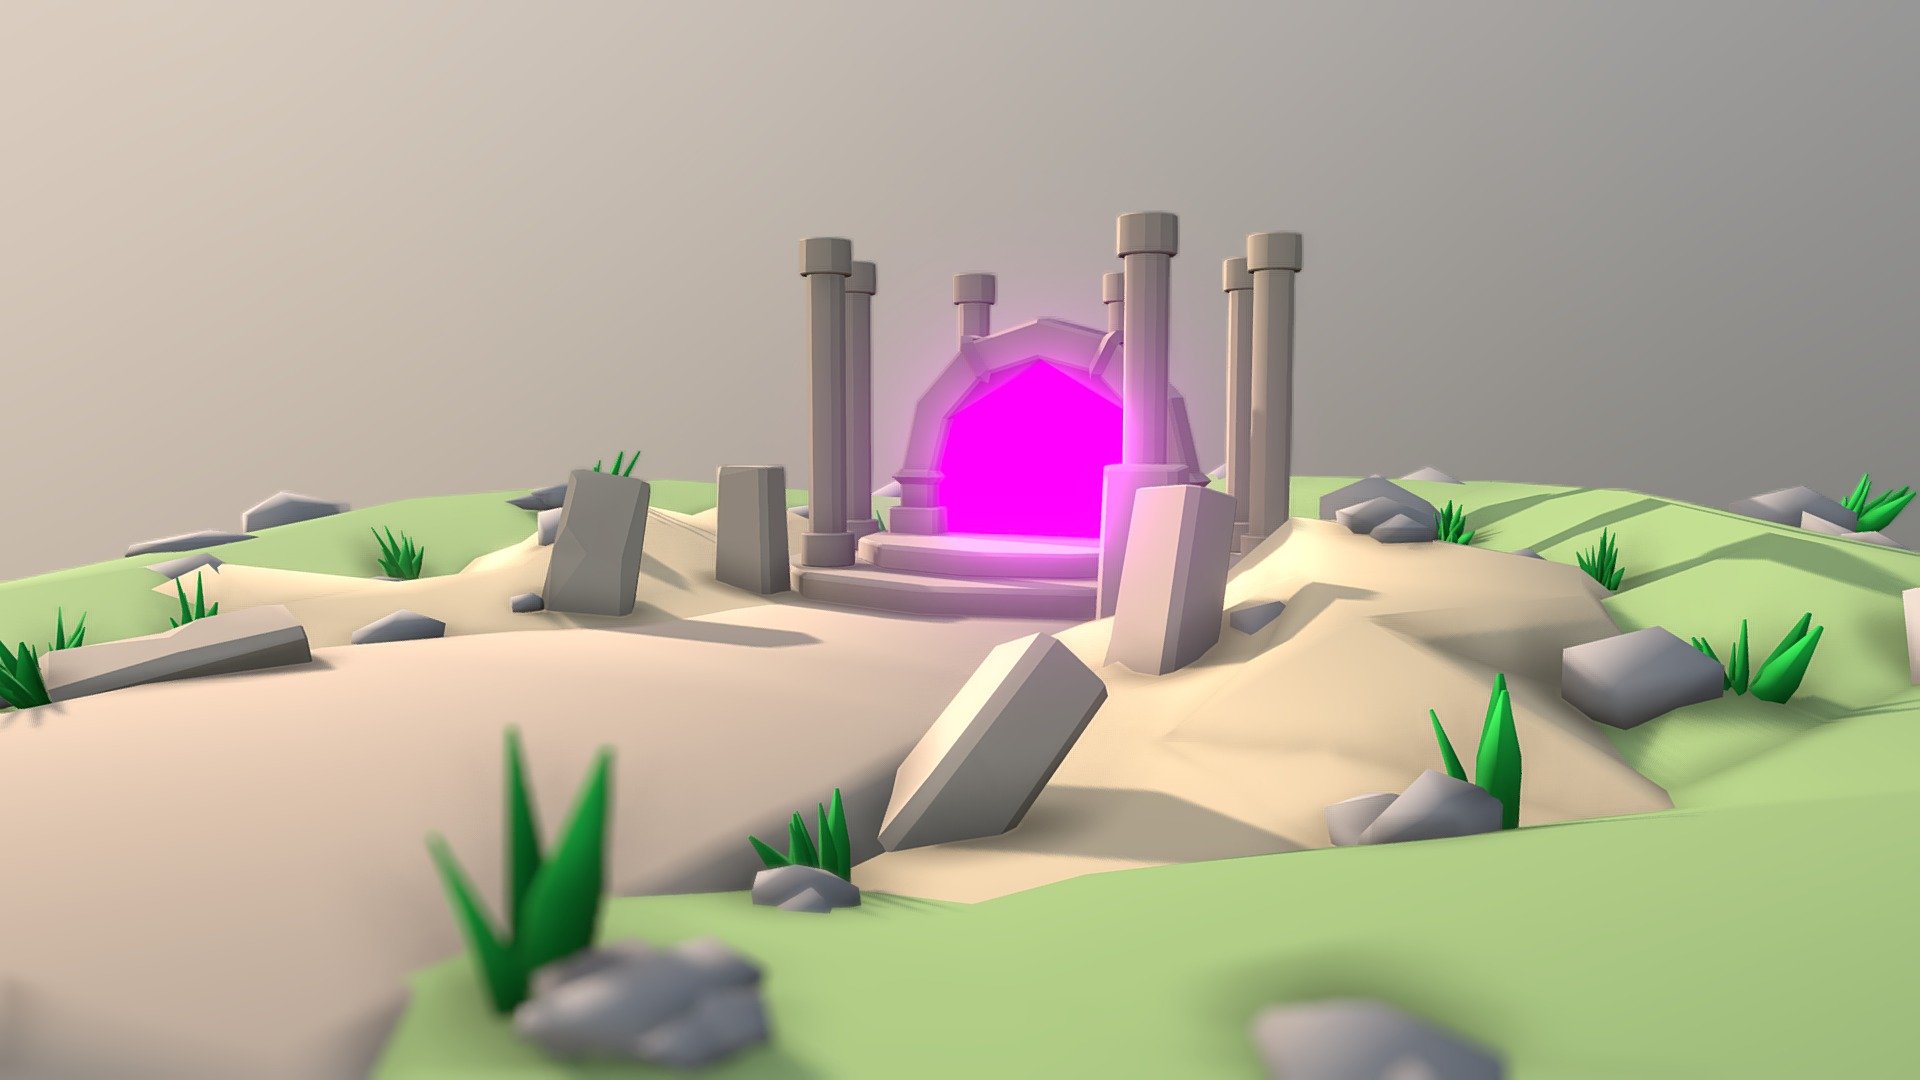 Game level design  - Fantasy Portal